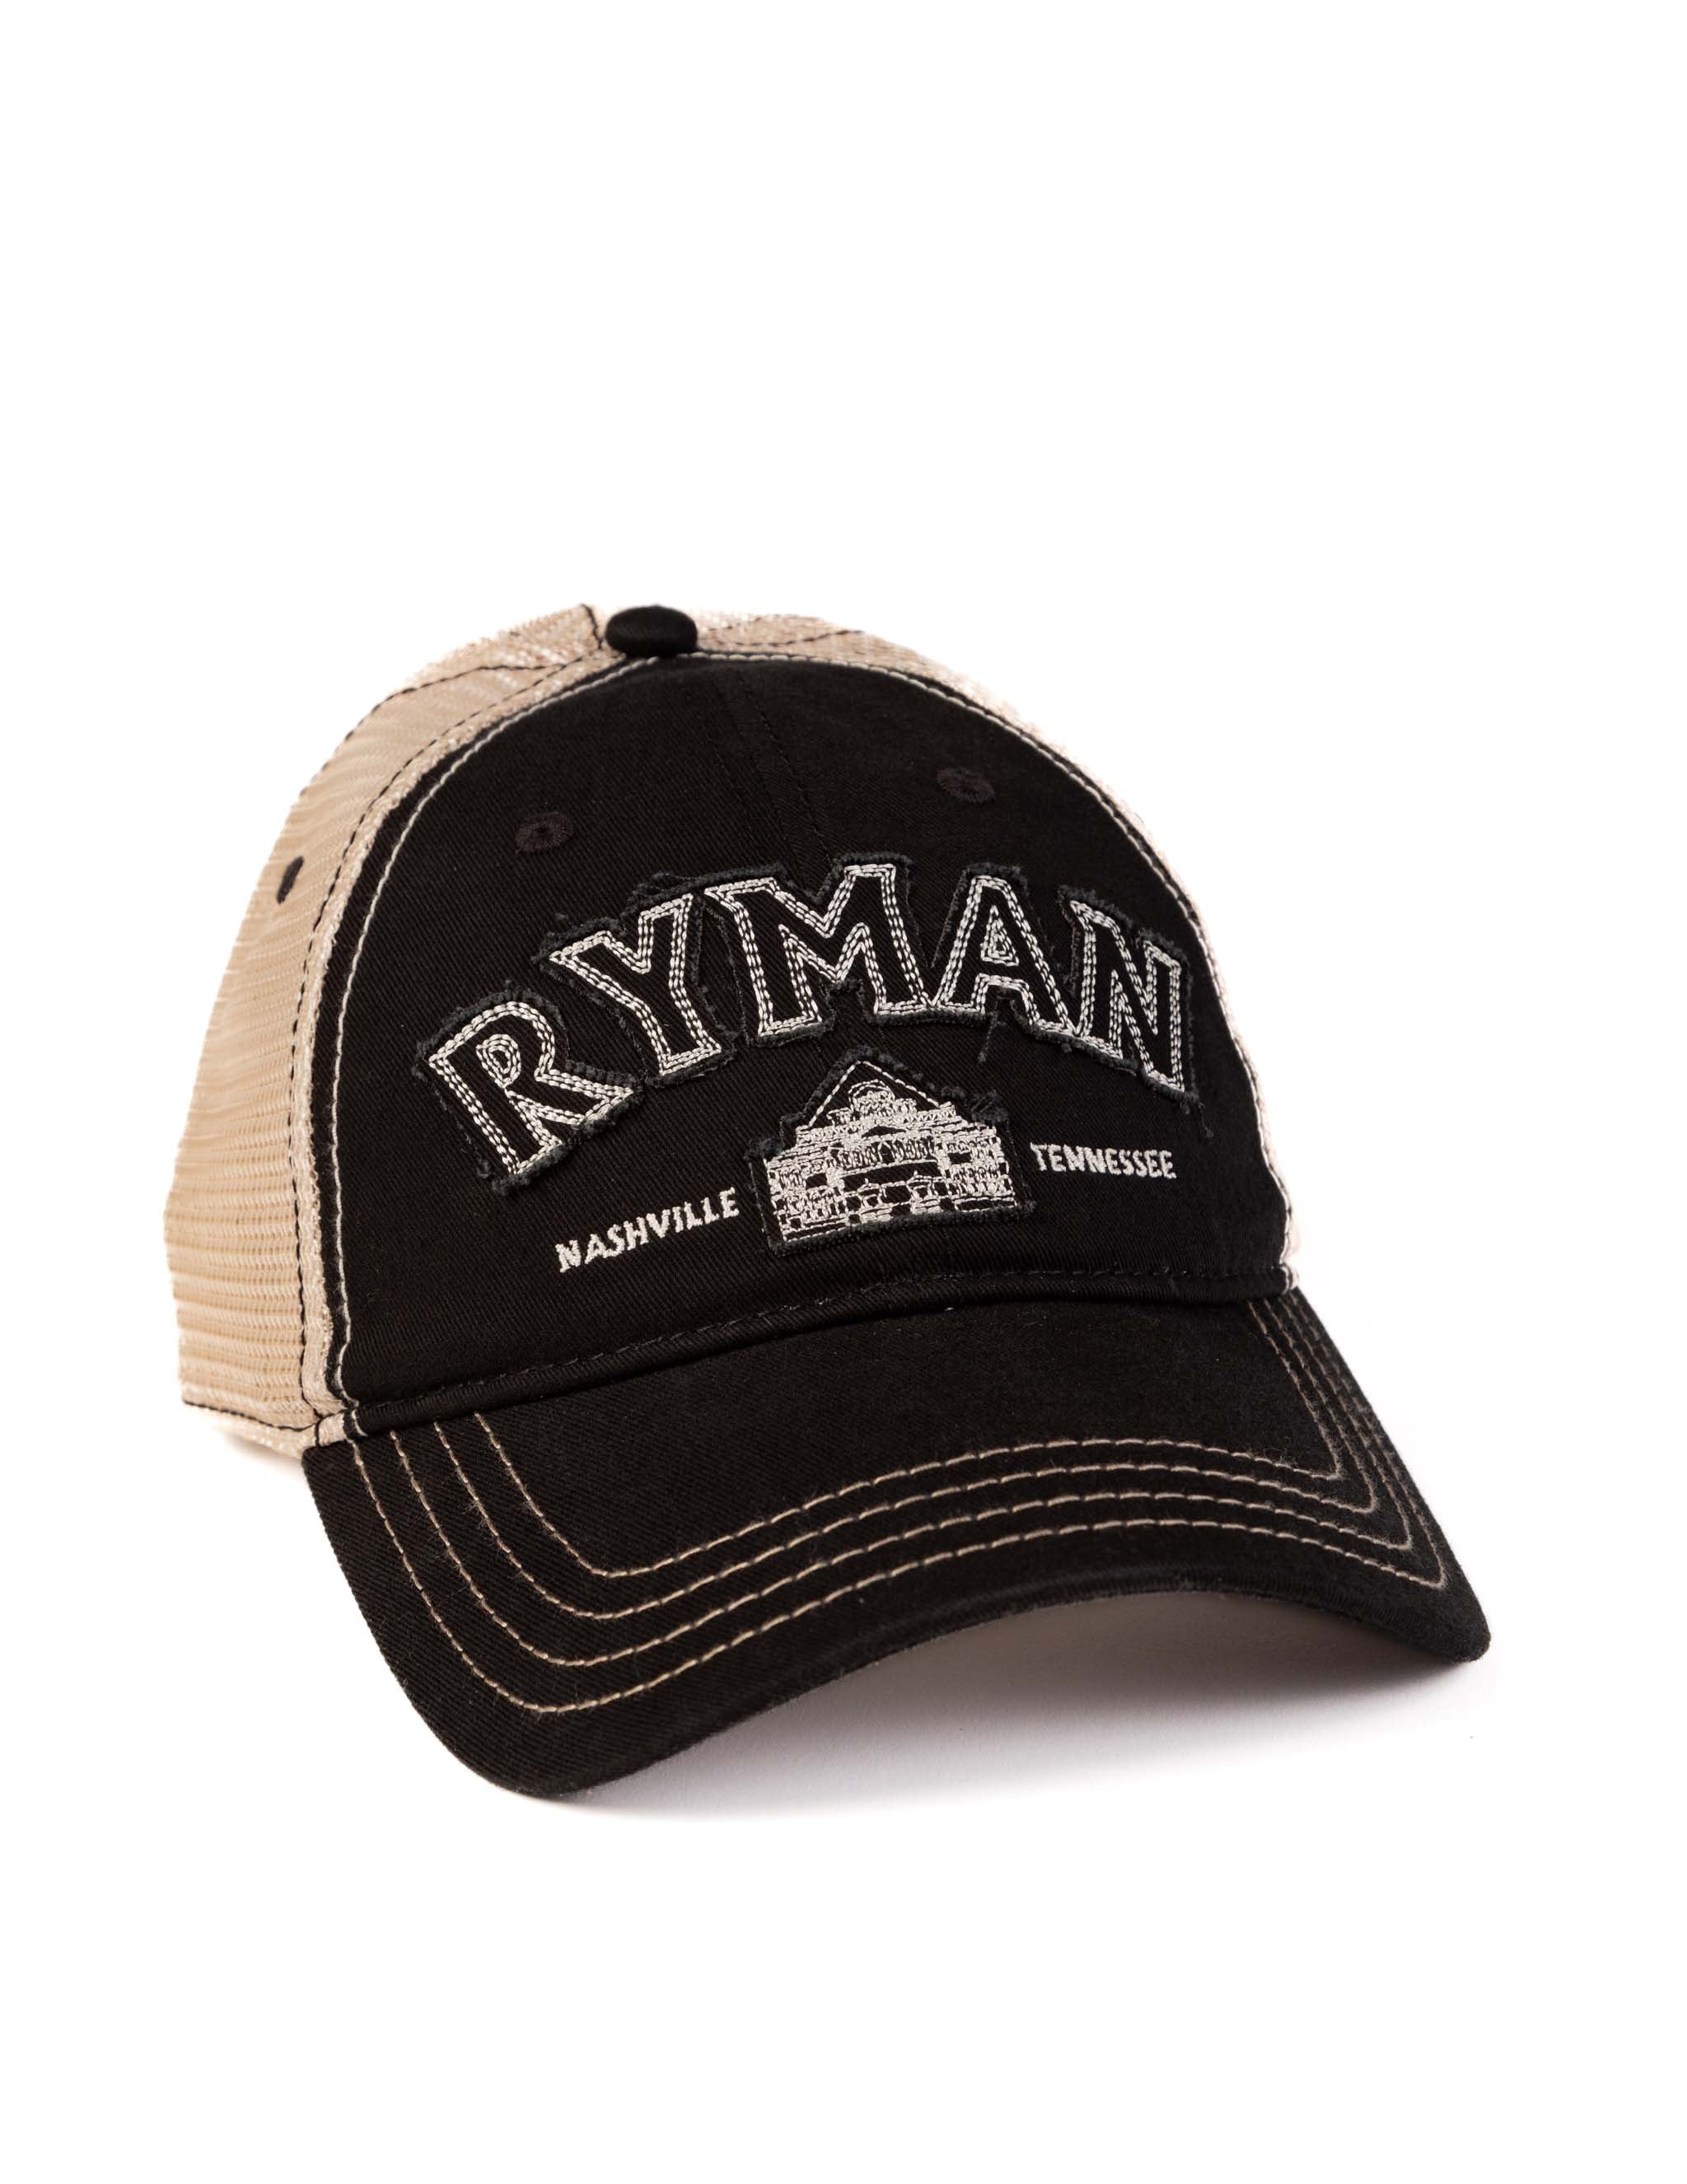 Ryman Building Mesh Hat